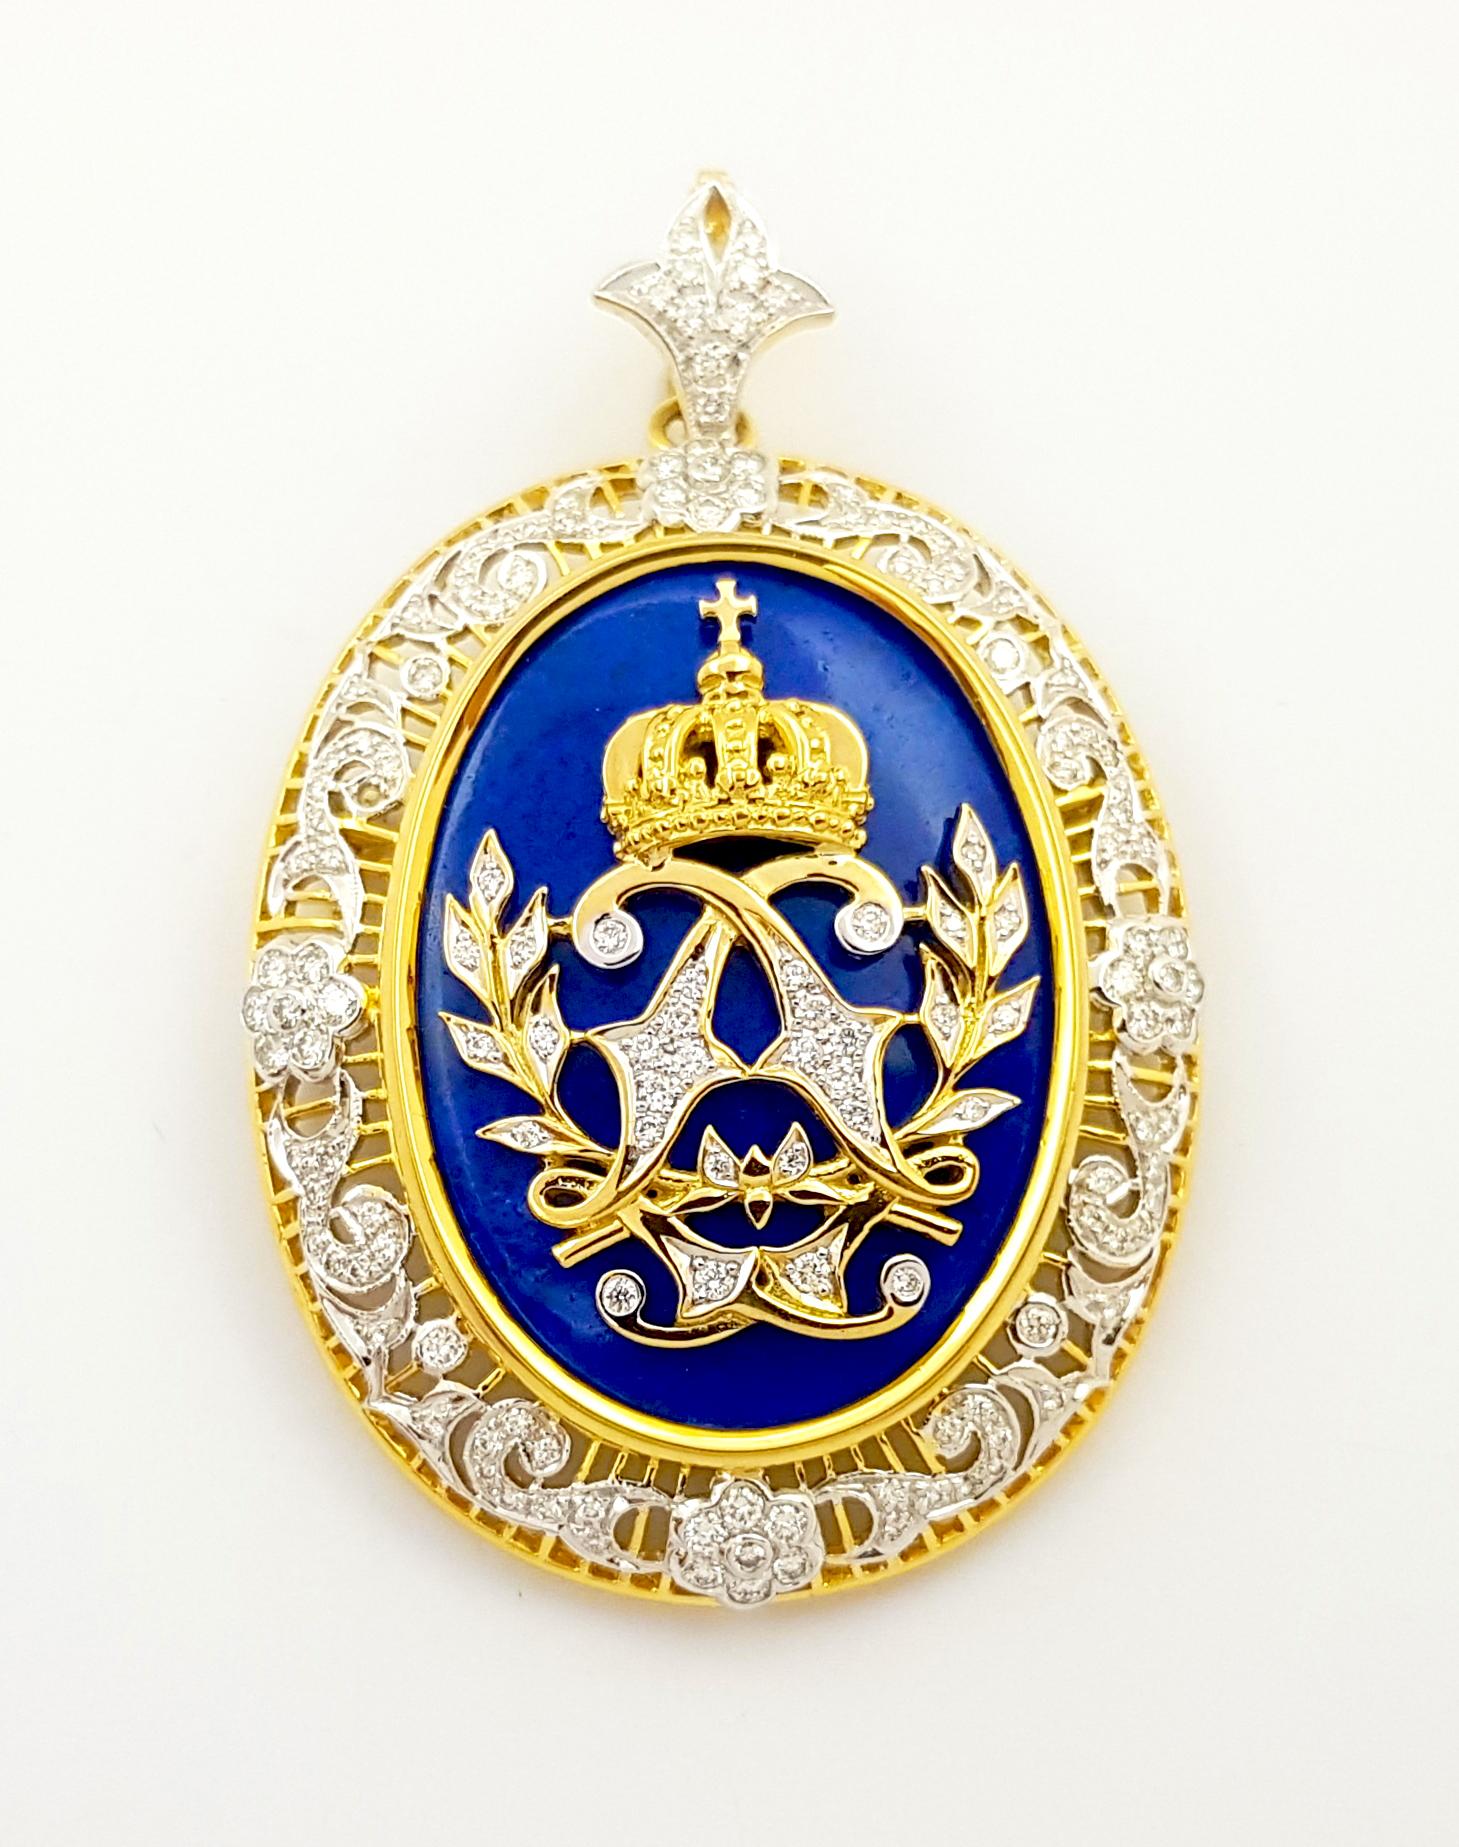 Lapiz Lazuli 26.79 carats and Diamond 1.11 carats Brooch/Pendant set in 18K Gold Settings

Width: 4.8 cm 
Length: 6.0 cm
Total Weight: 26.24 grams

